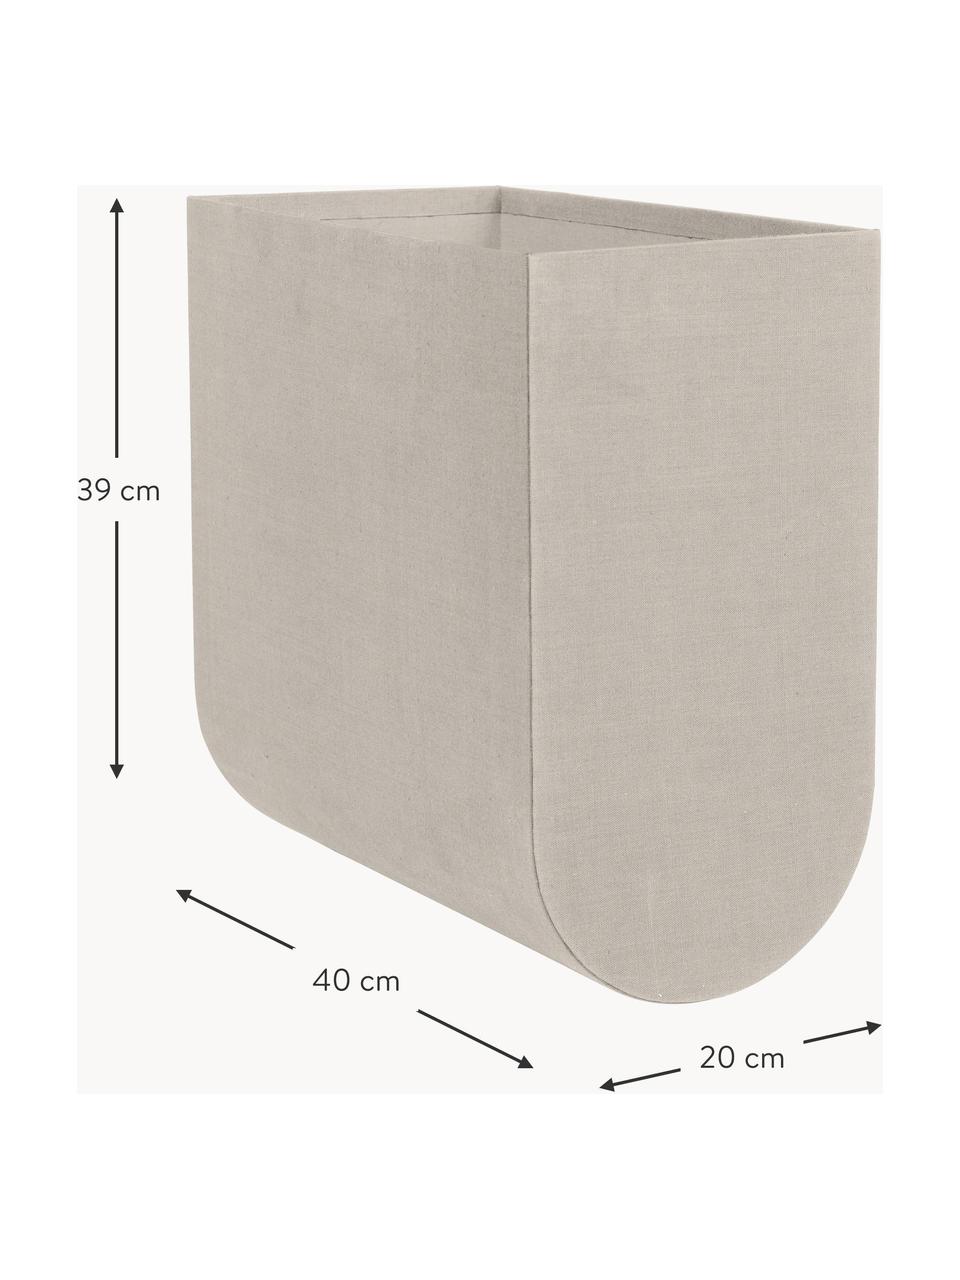 Caja artesanal Curved, 20 cm, Funda: 100% algodón, Estructura: cartón, Beige claro, An 20 x Al 39 cm